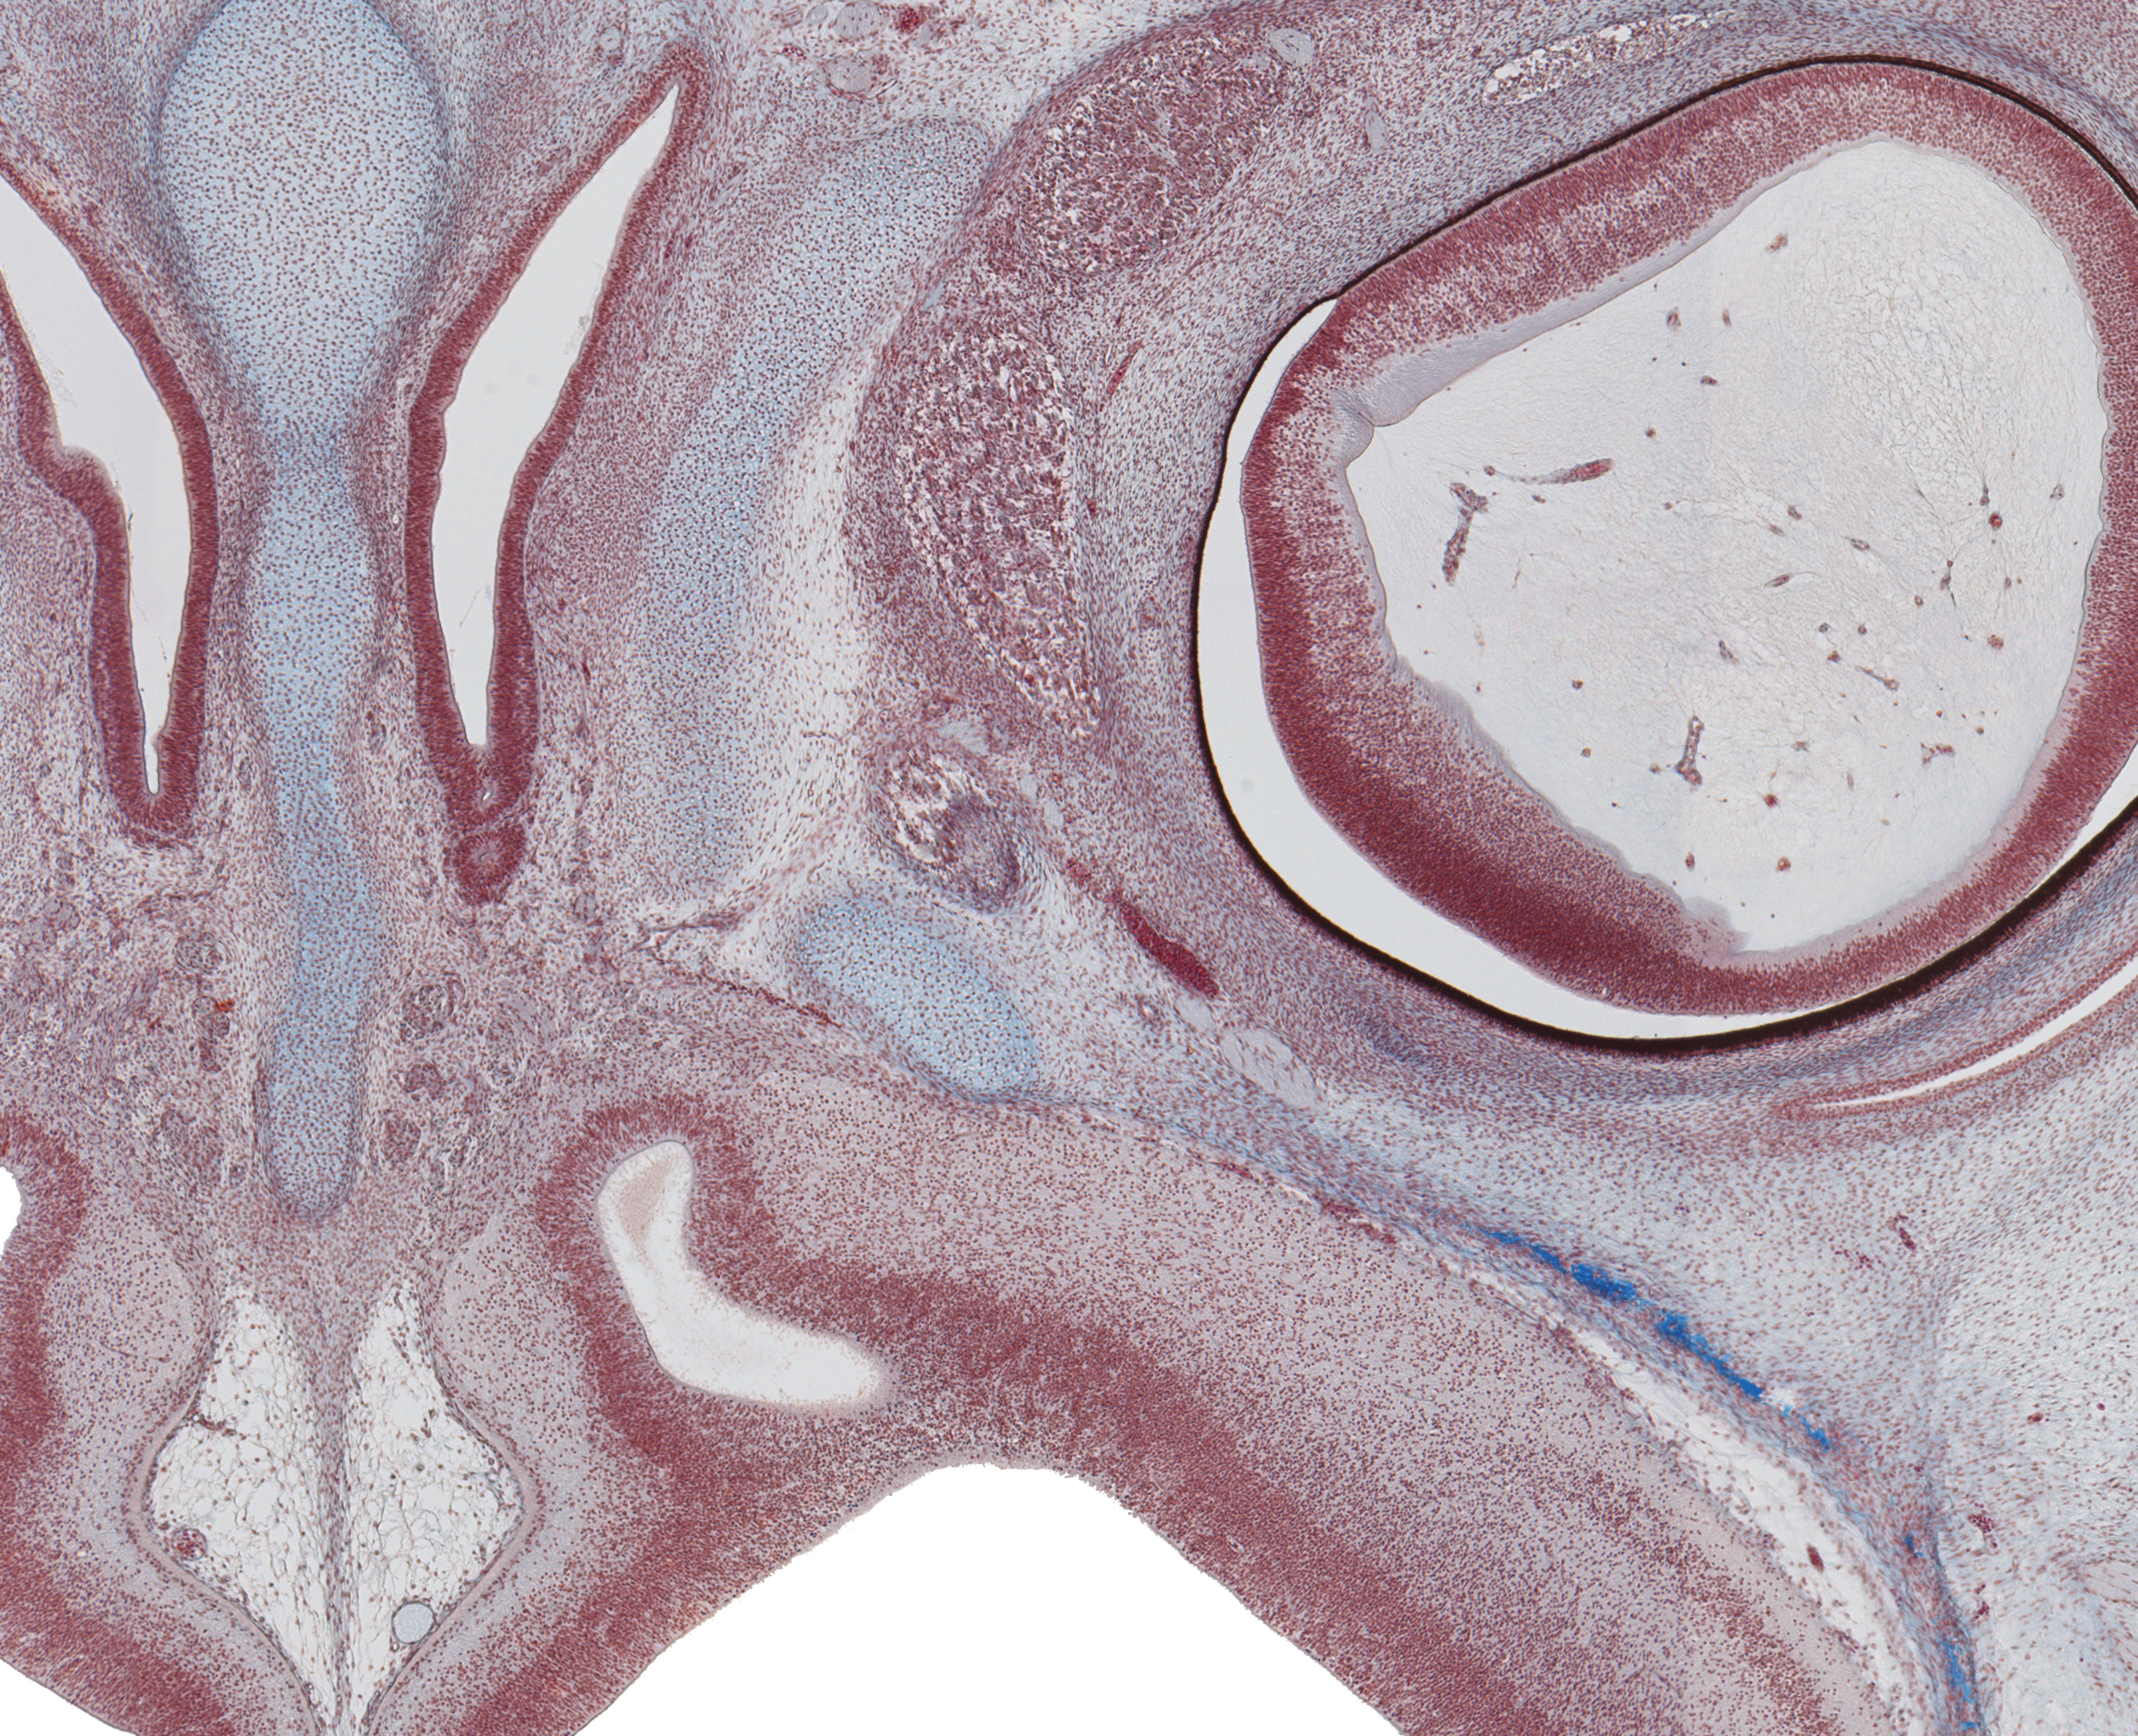 Olfactory Bulb and Frontal Lobe of Cerebral Hemisphere